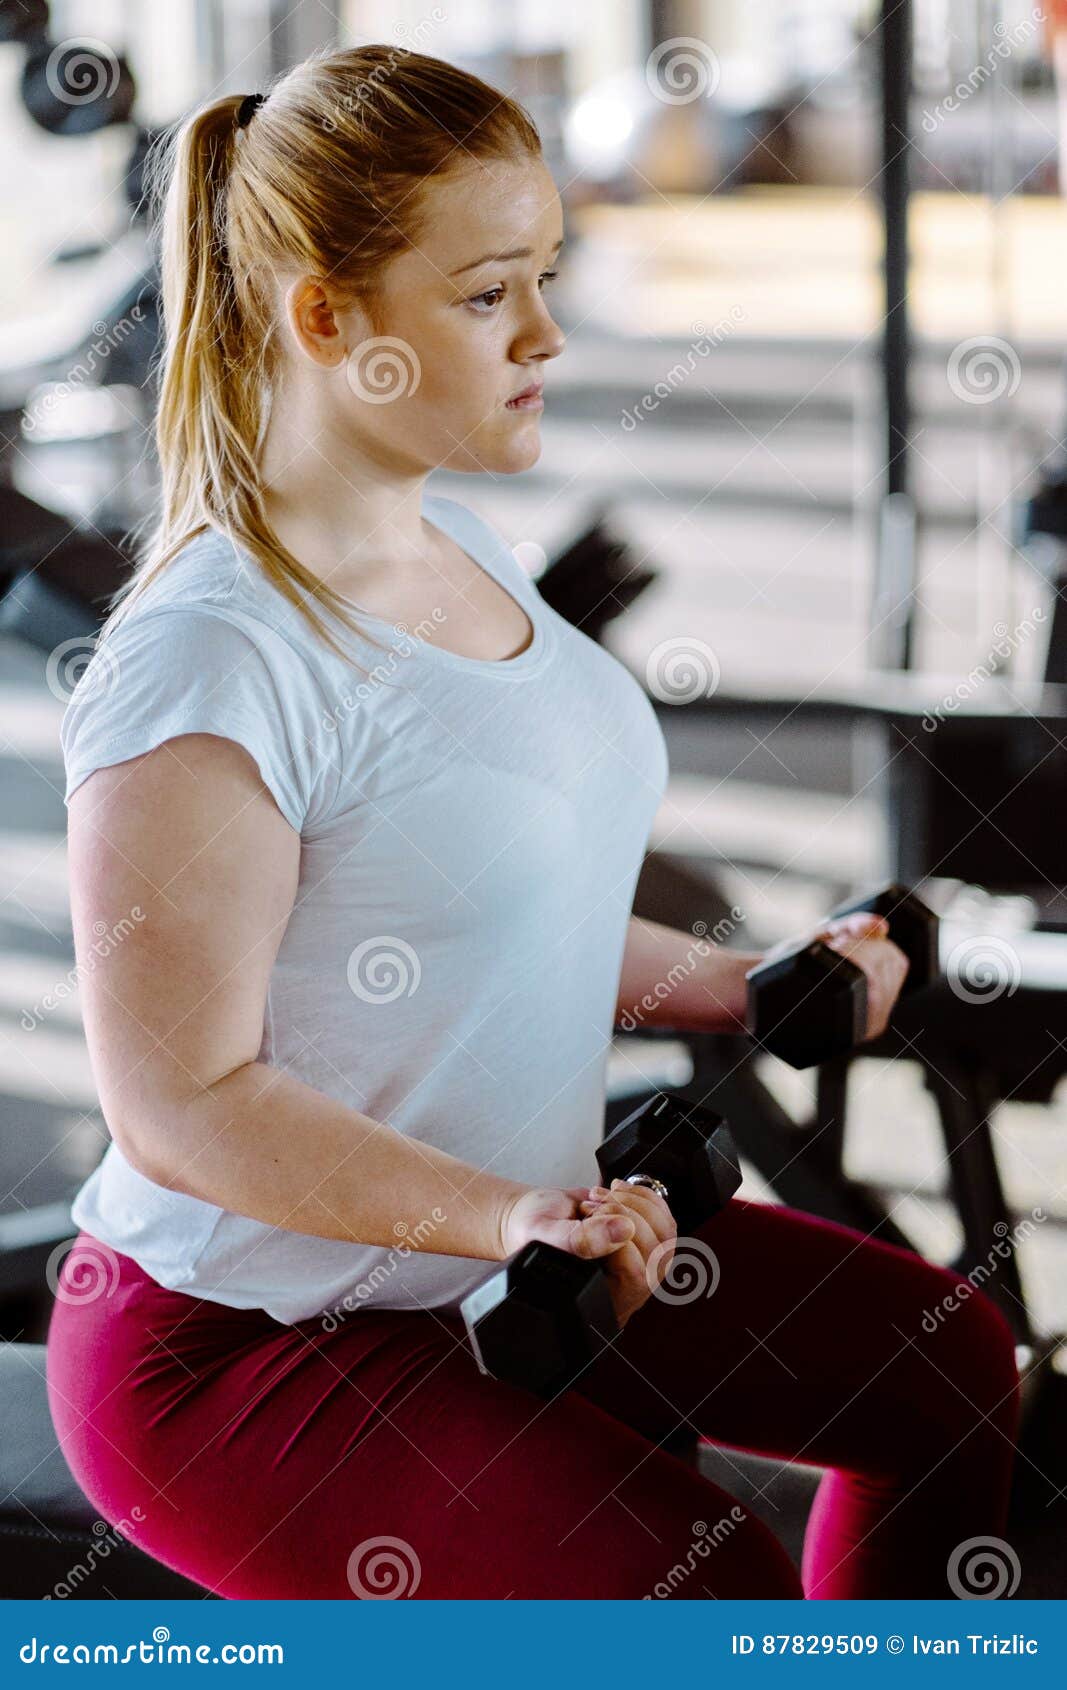 chubby sexy girls in gym